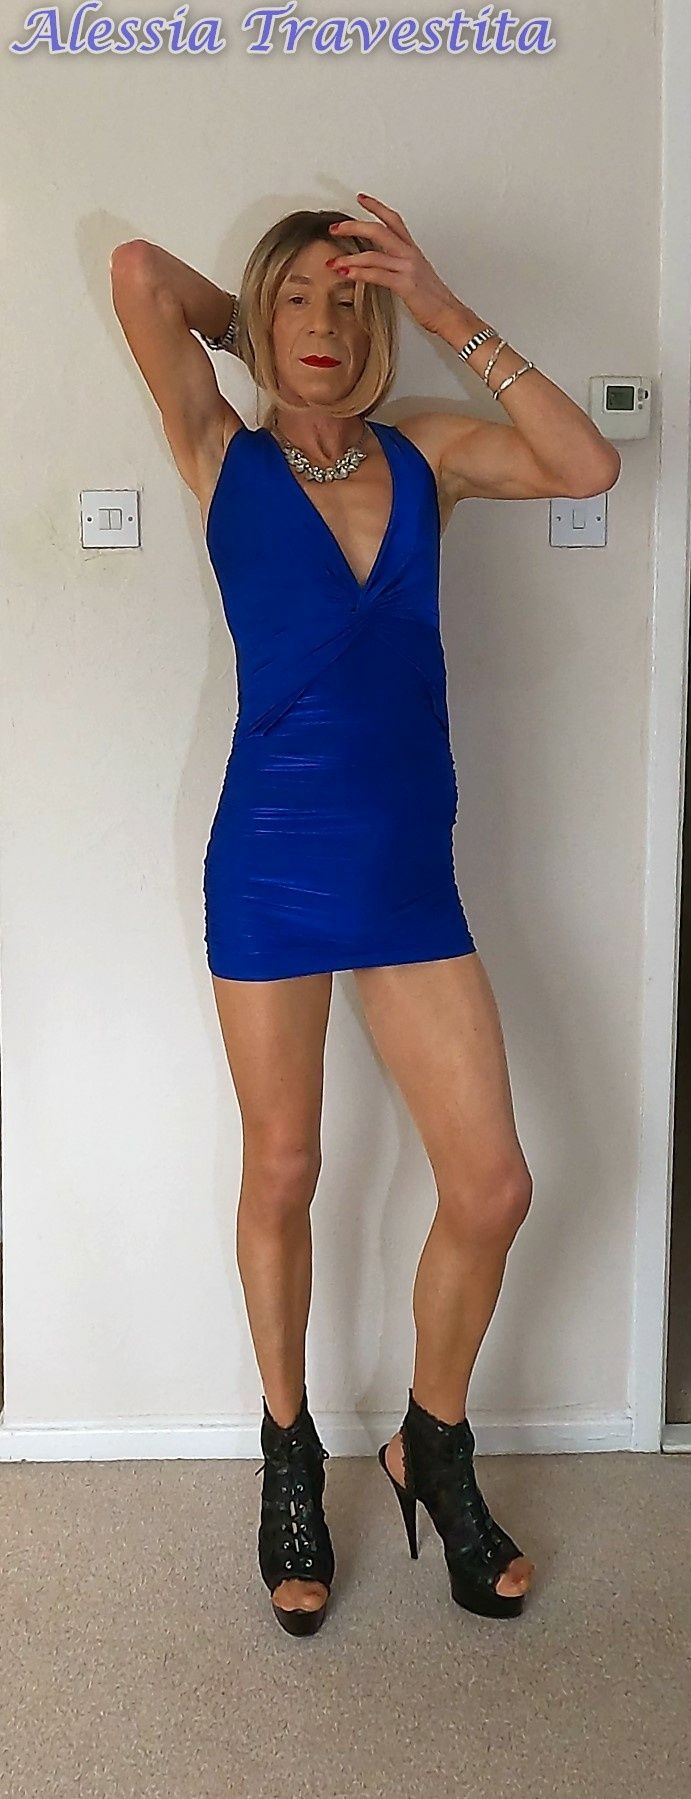 77 Alessia Travestita in Blue Italian Designer Dress #54